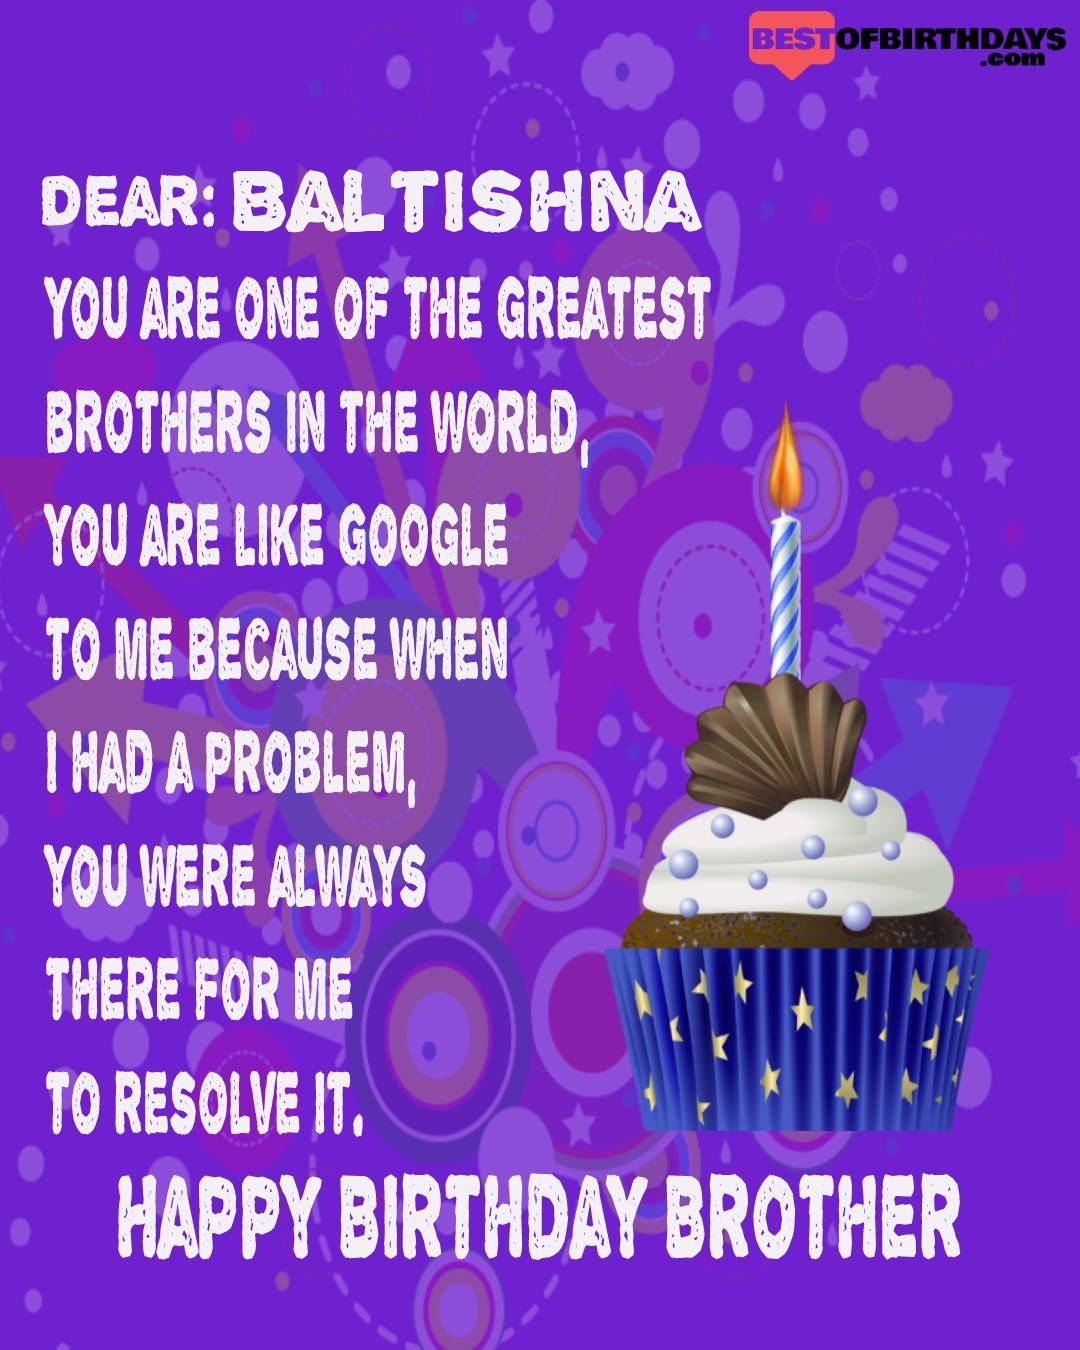 Happy birthday baltishna bhai brother bro